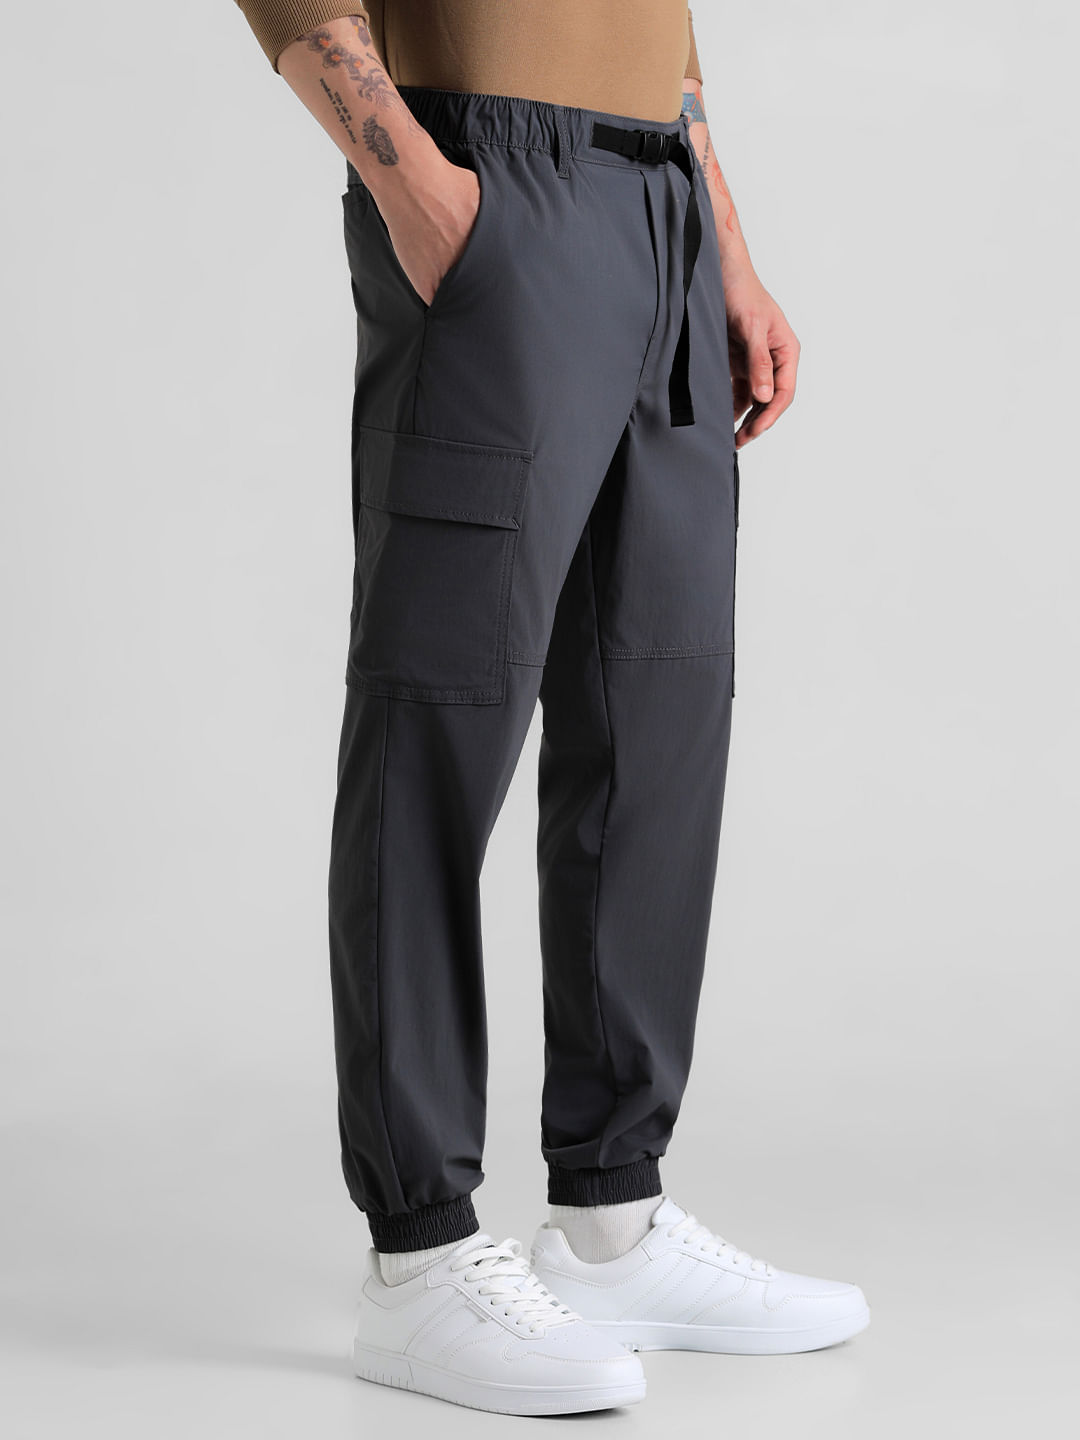 Mens Cargo Pants Gyms Fitness Sportswear| Alibaba.com